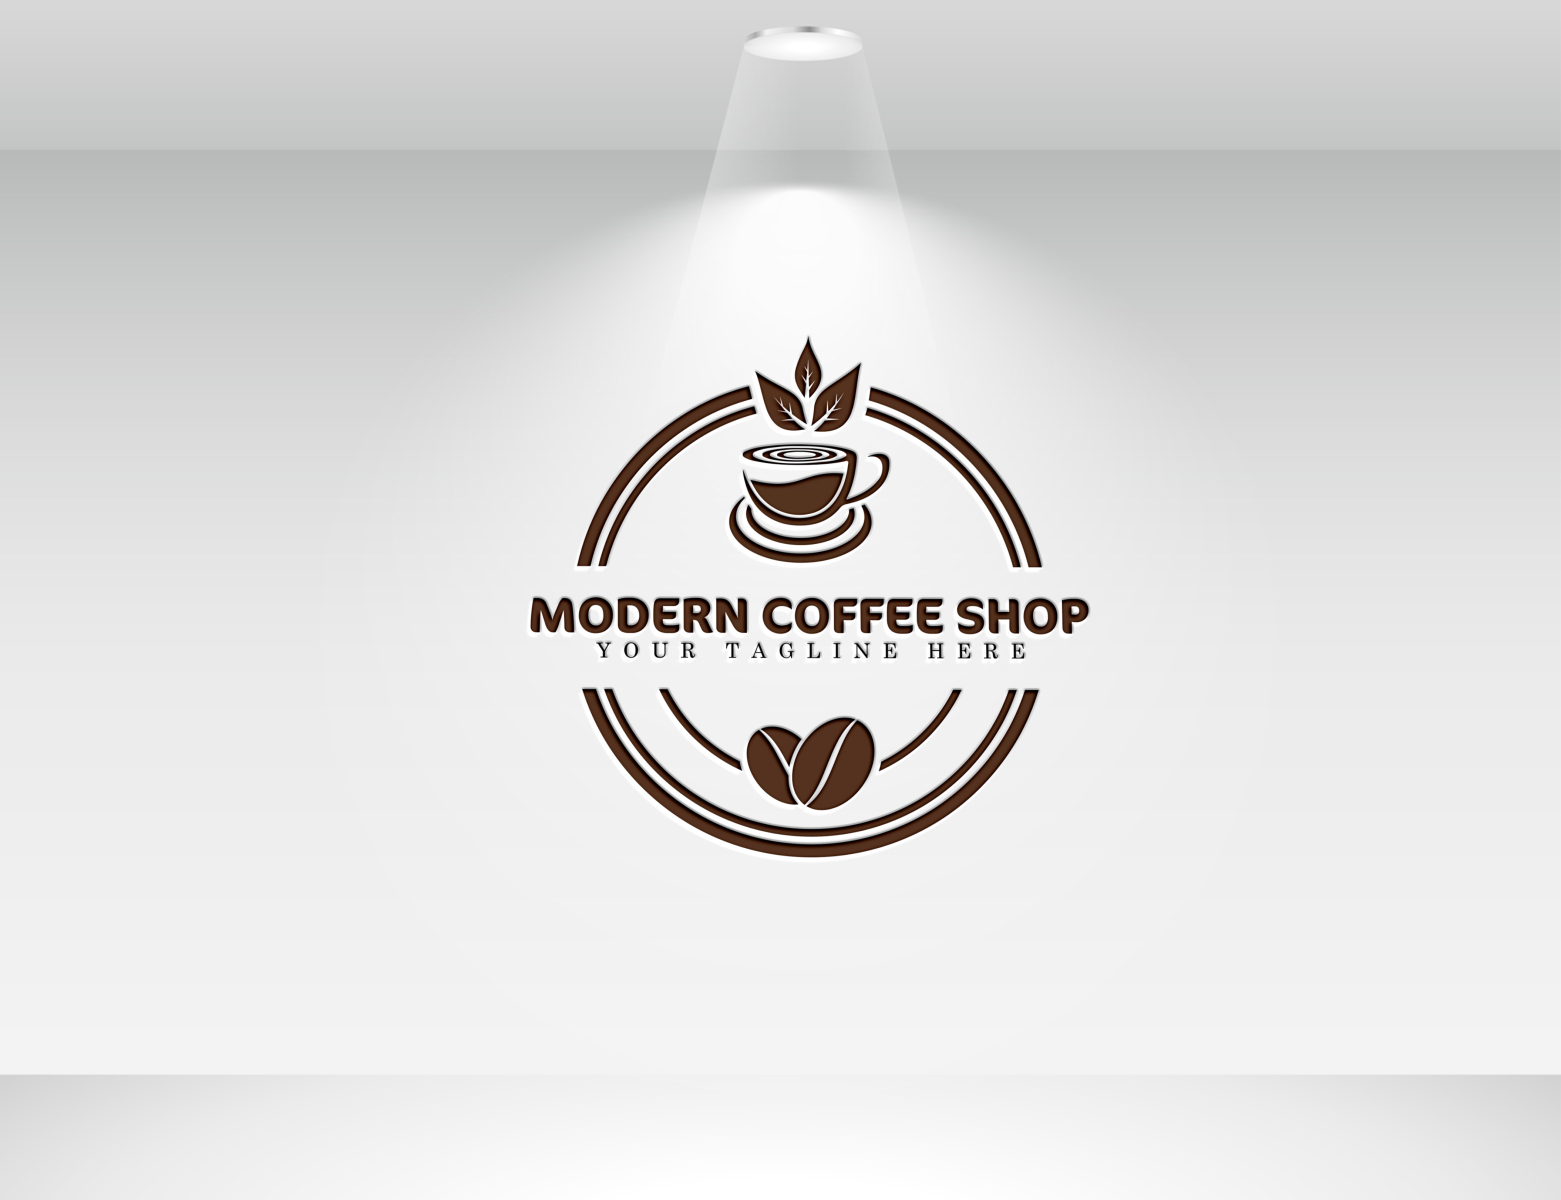 Modern Coffee Shop - Logo Design. by Tanvir Onik94 on Dribbble